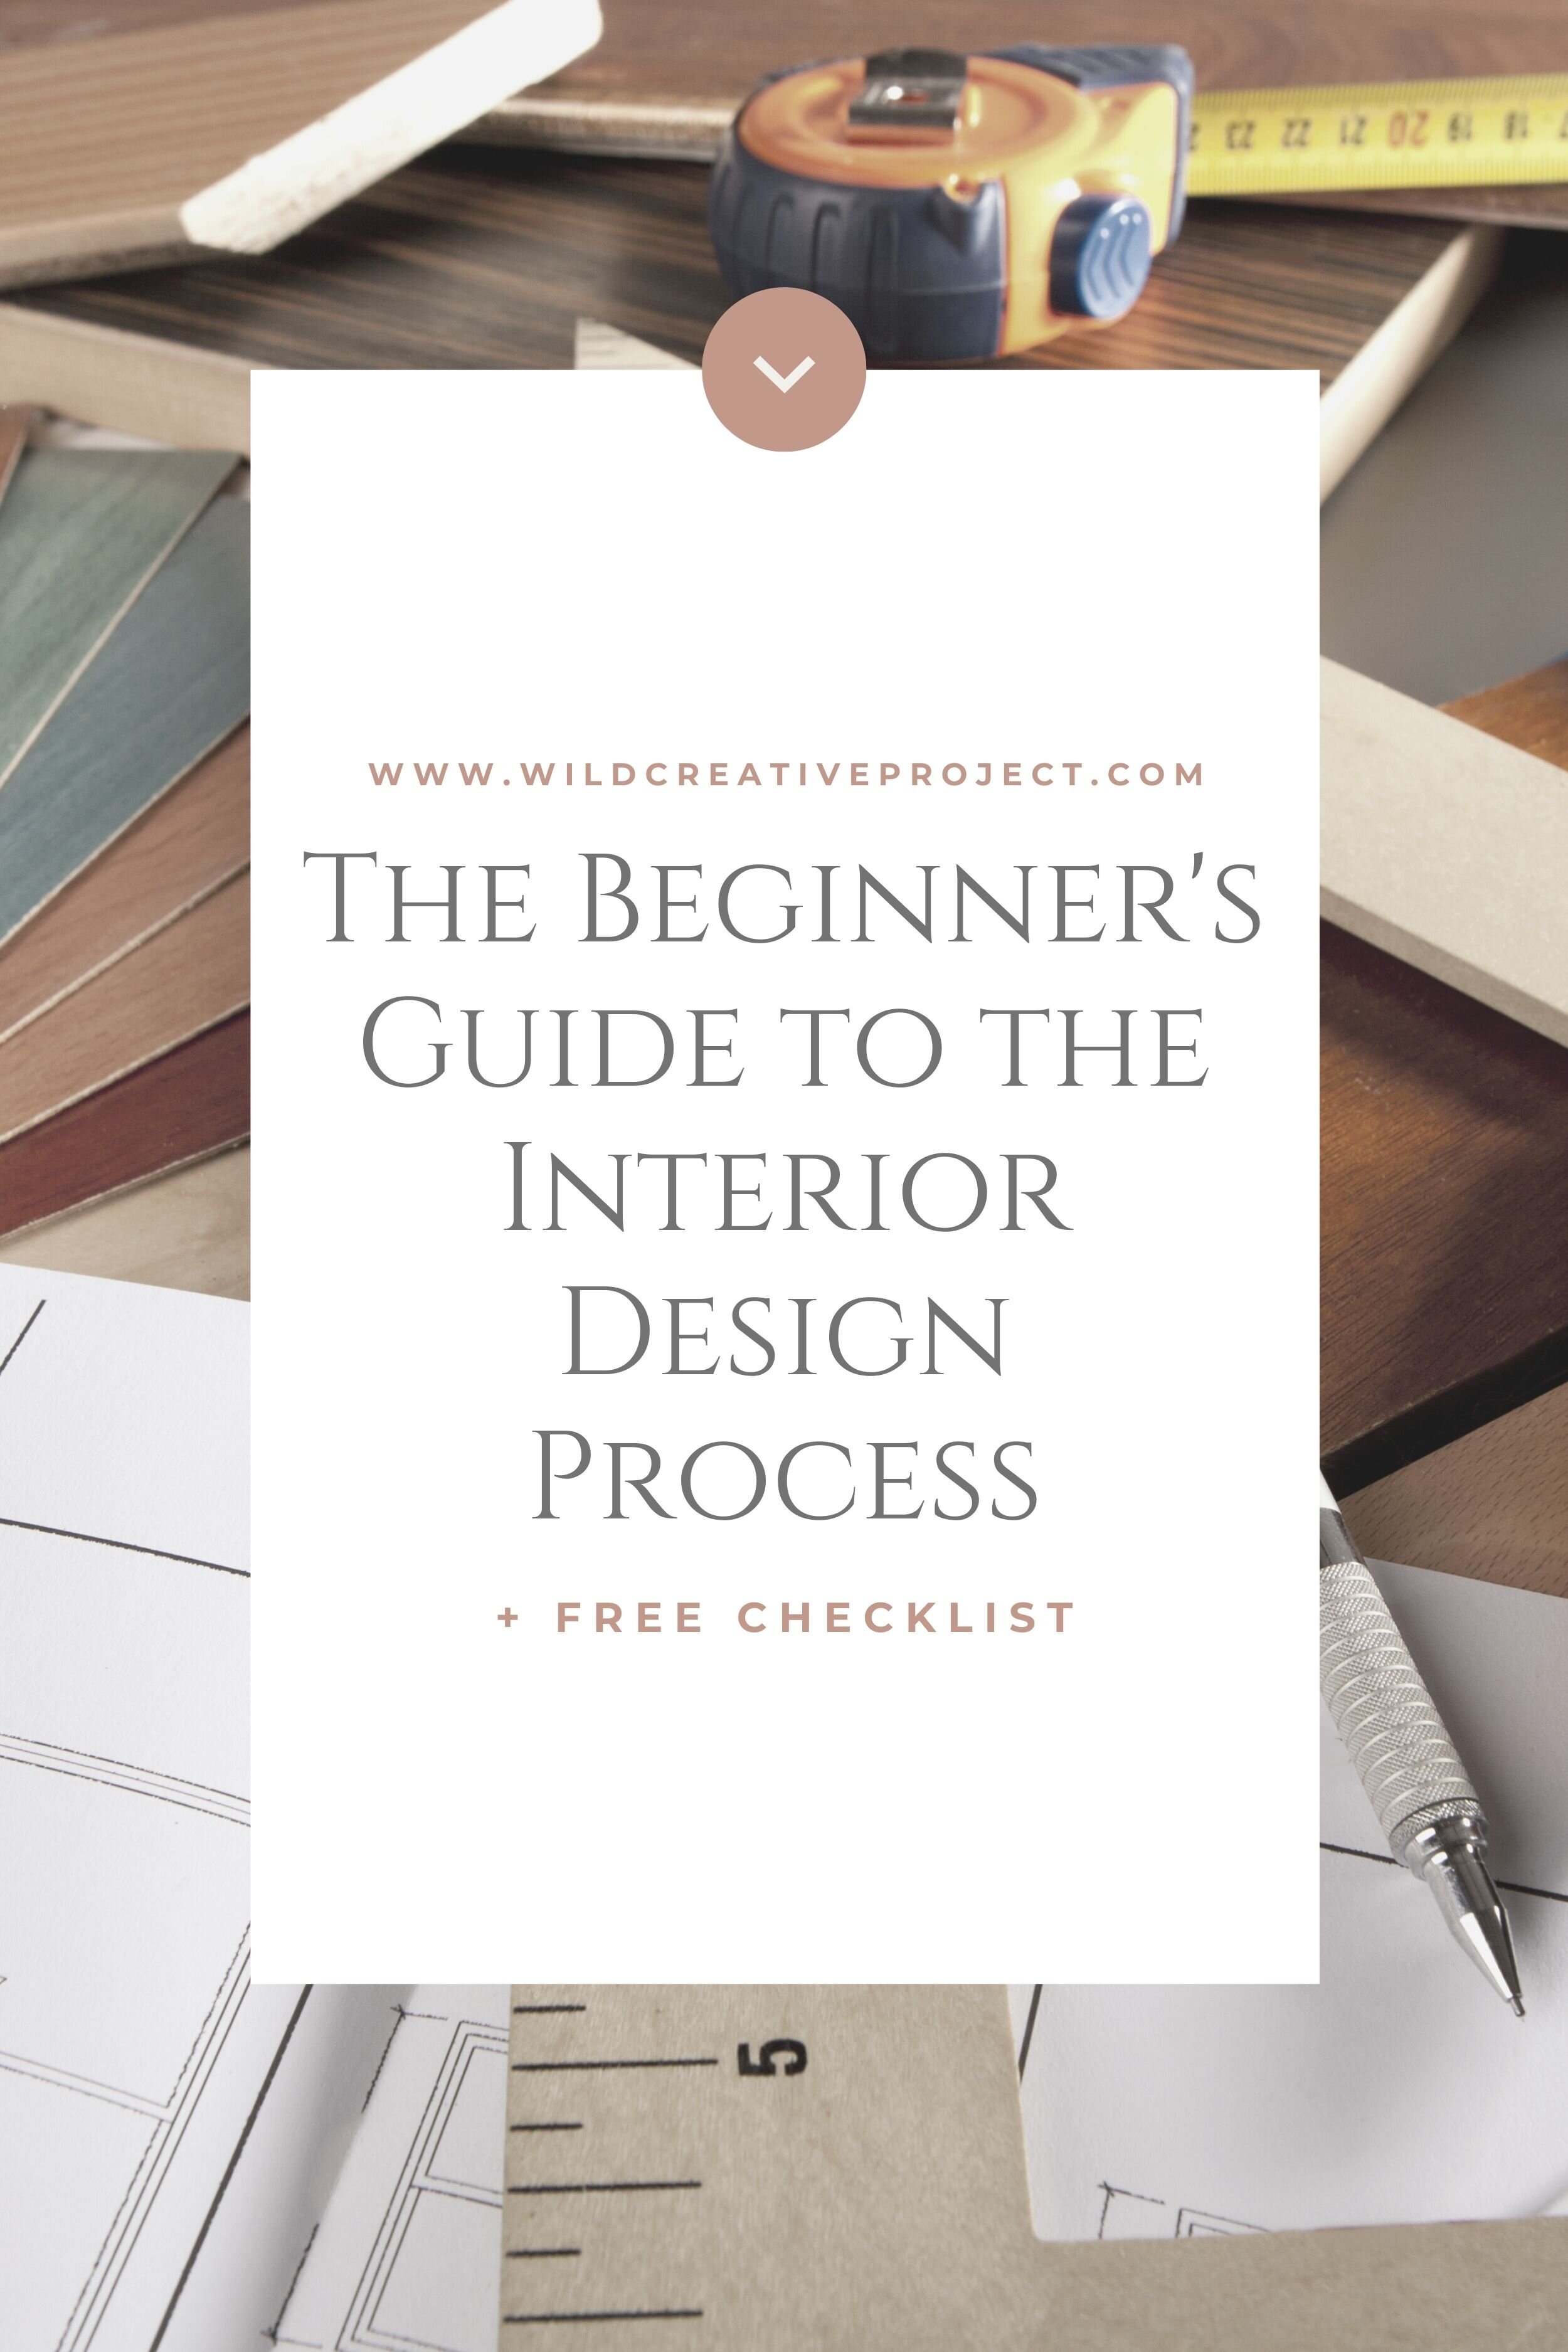 Interior design software for professional interior designers